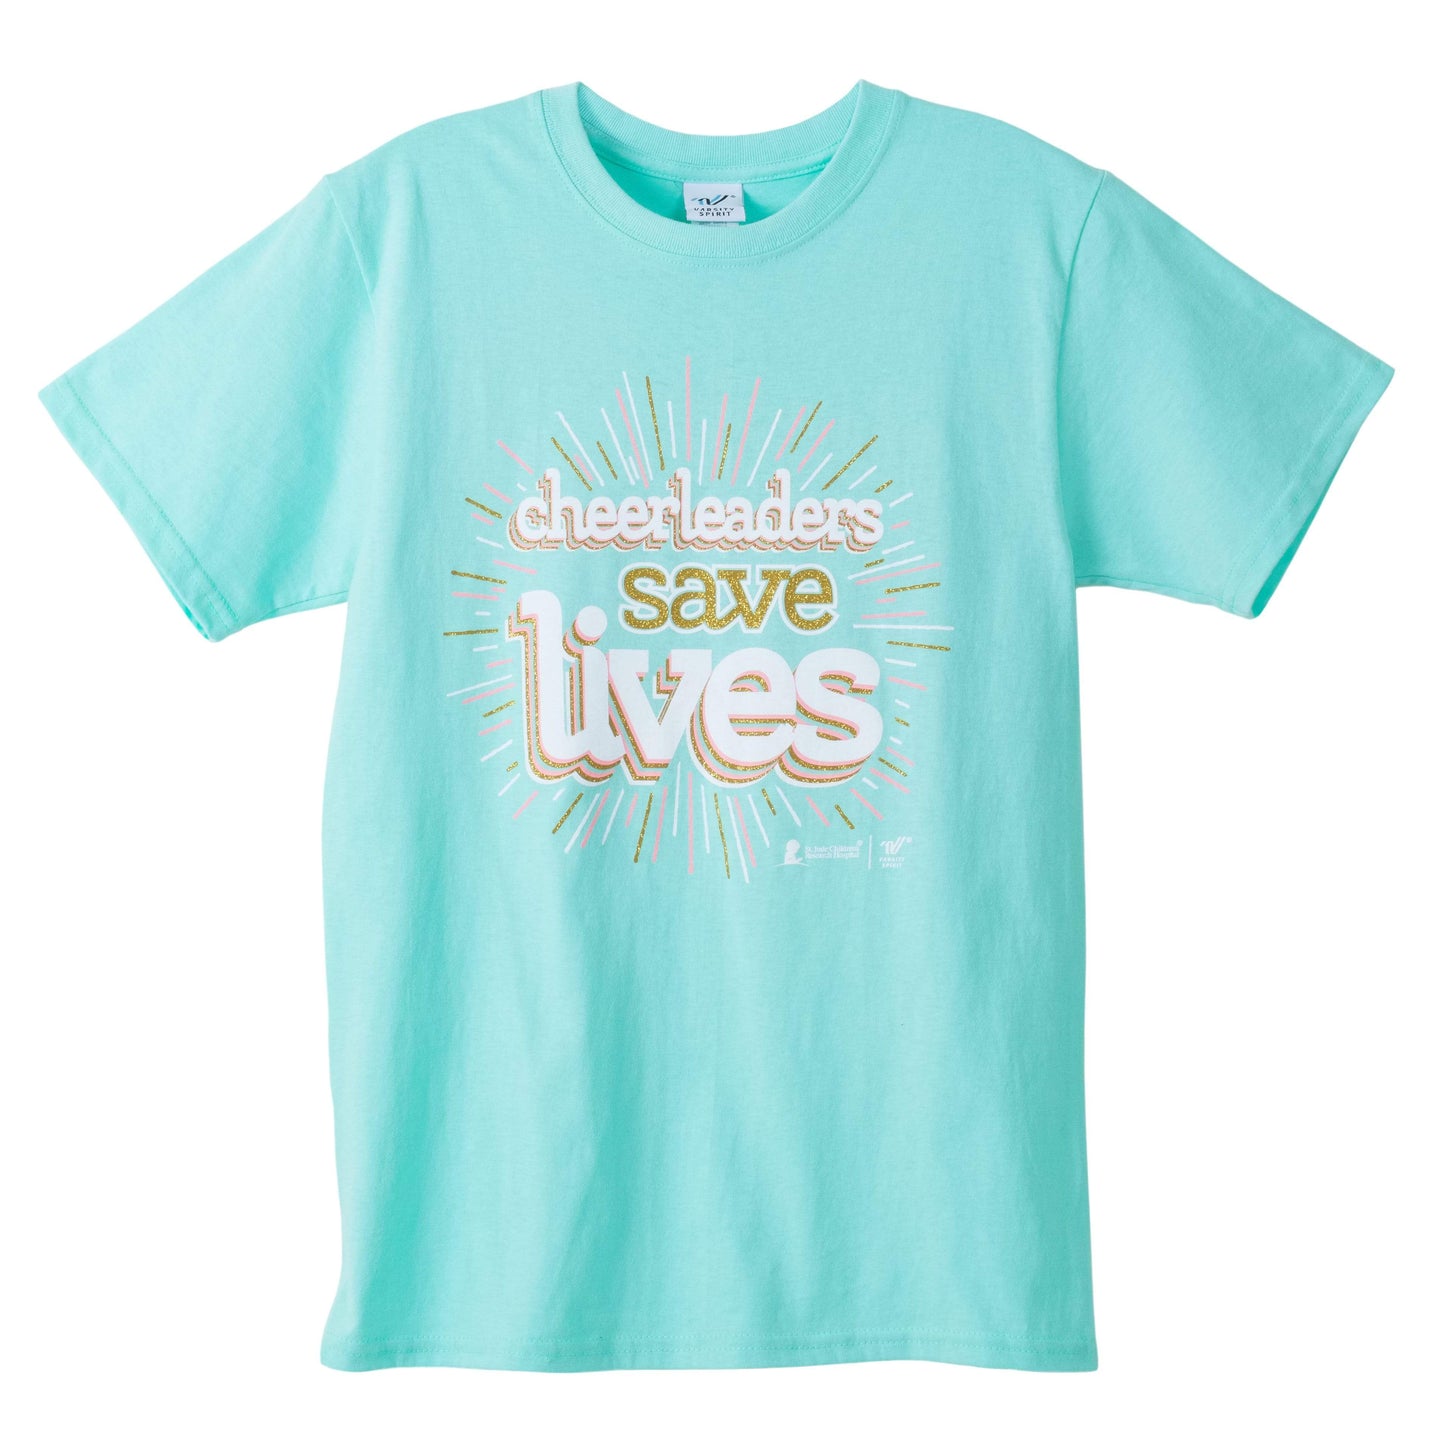 St. Jude T-Shirt - Cheerleaders Save Lives